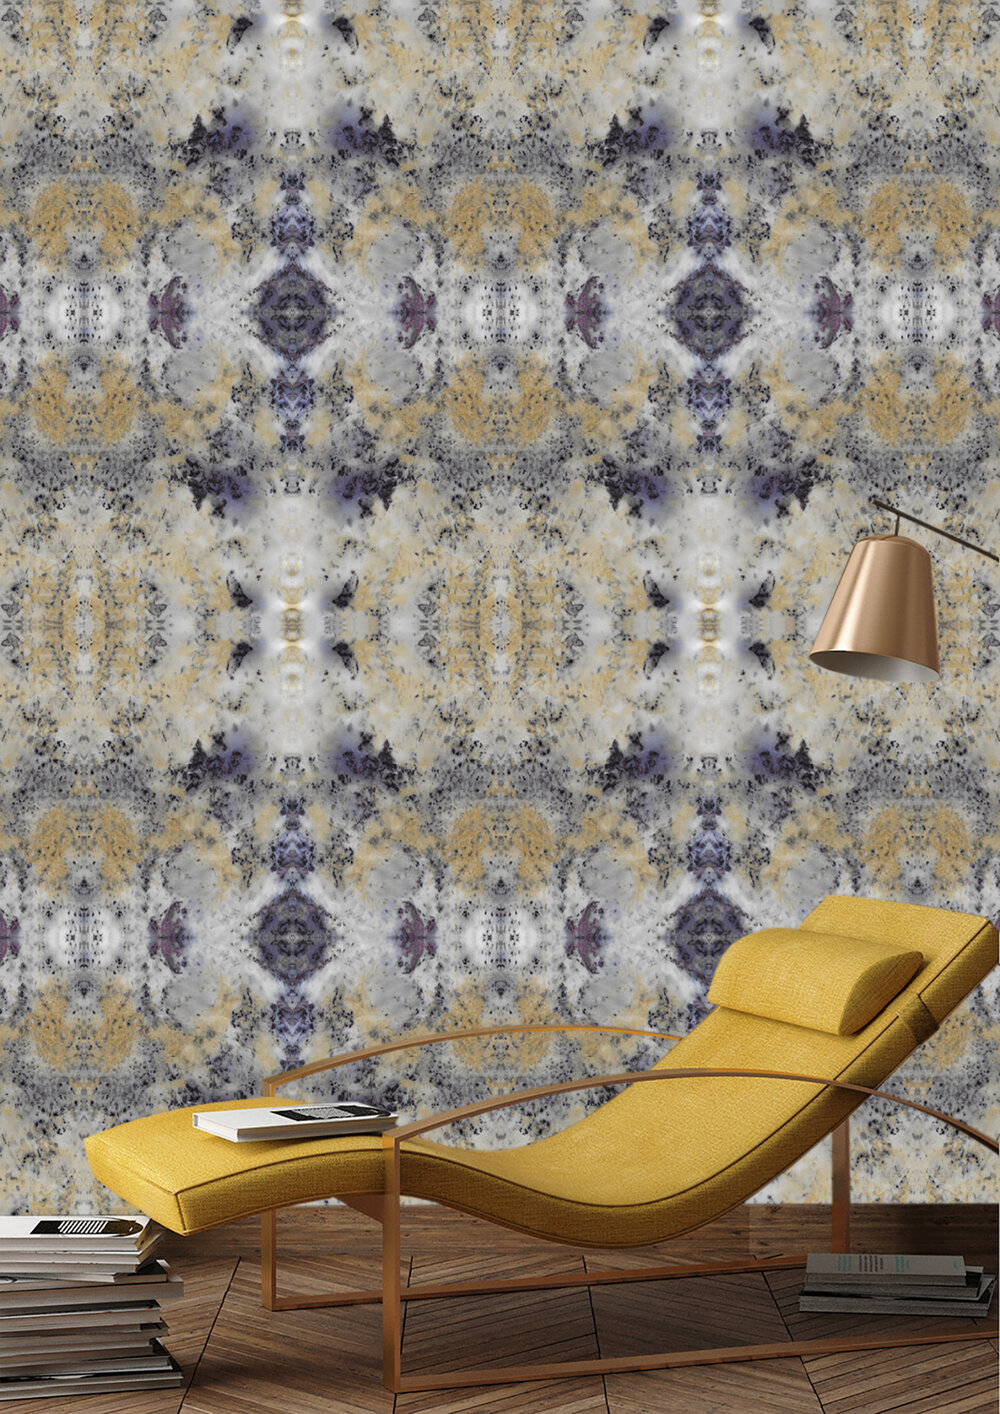 wallpaper-eso-studio-blueberry-crumble-blue-purple-living-room-gold-setee.jpg